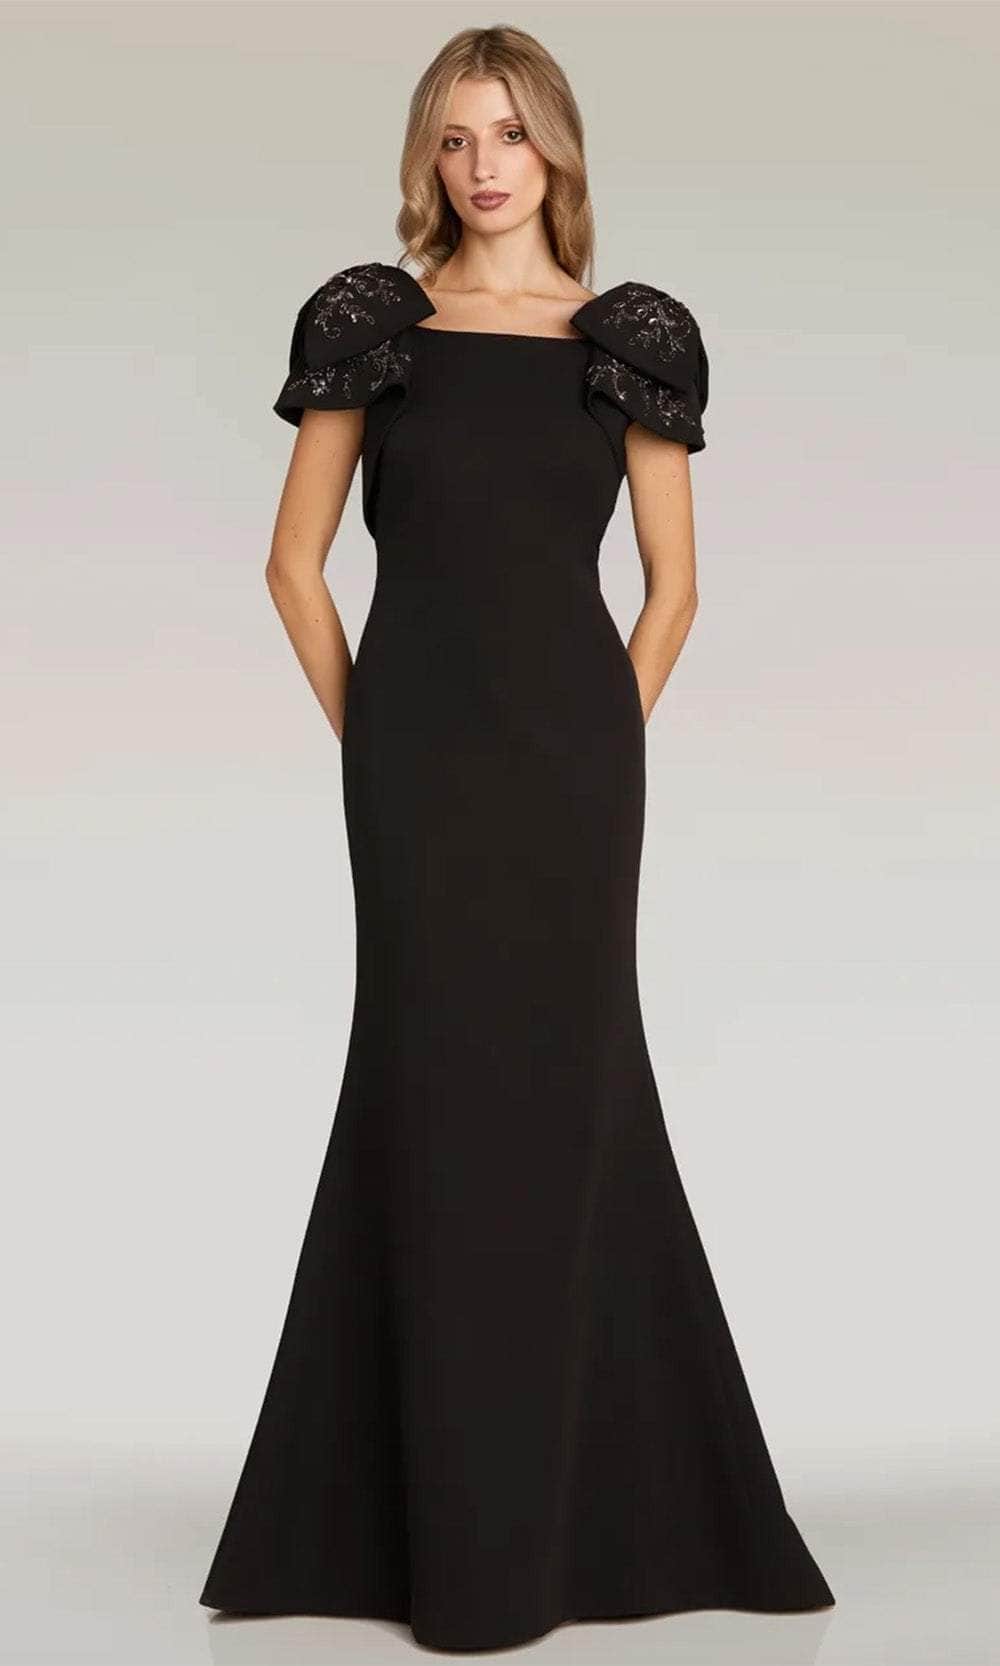 Gia Franco 12305 - Beaded Bow Evening Dress
